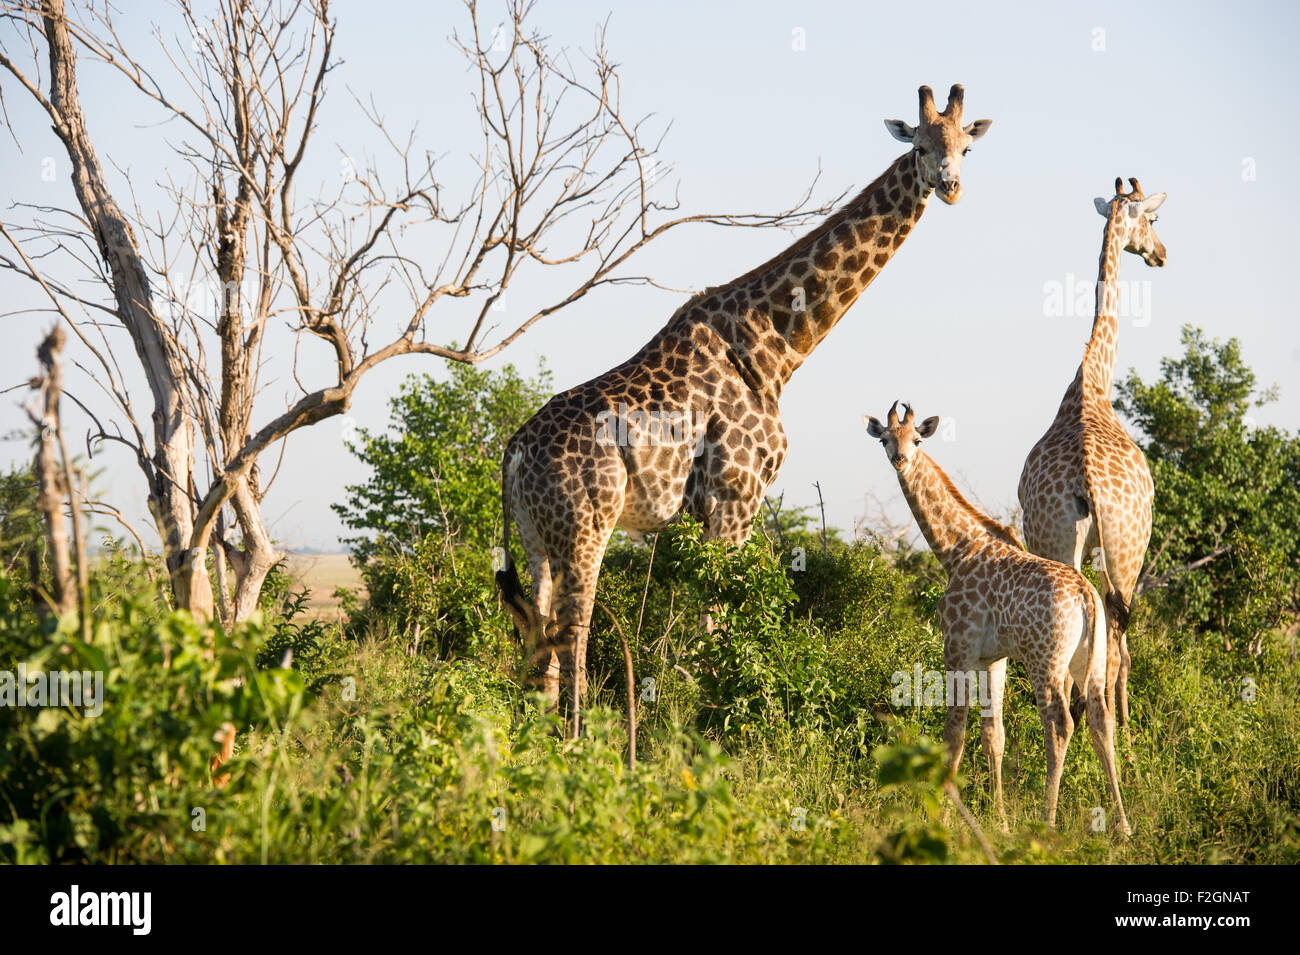 A family of Giraffe's (Giraffa camelopardalis) in the wild in Botswana, Africa Stock Photo